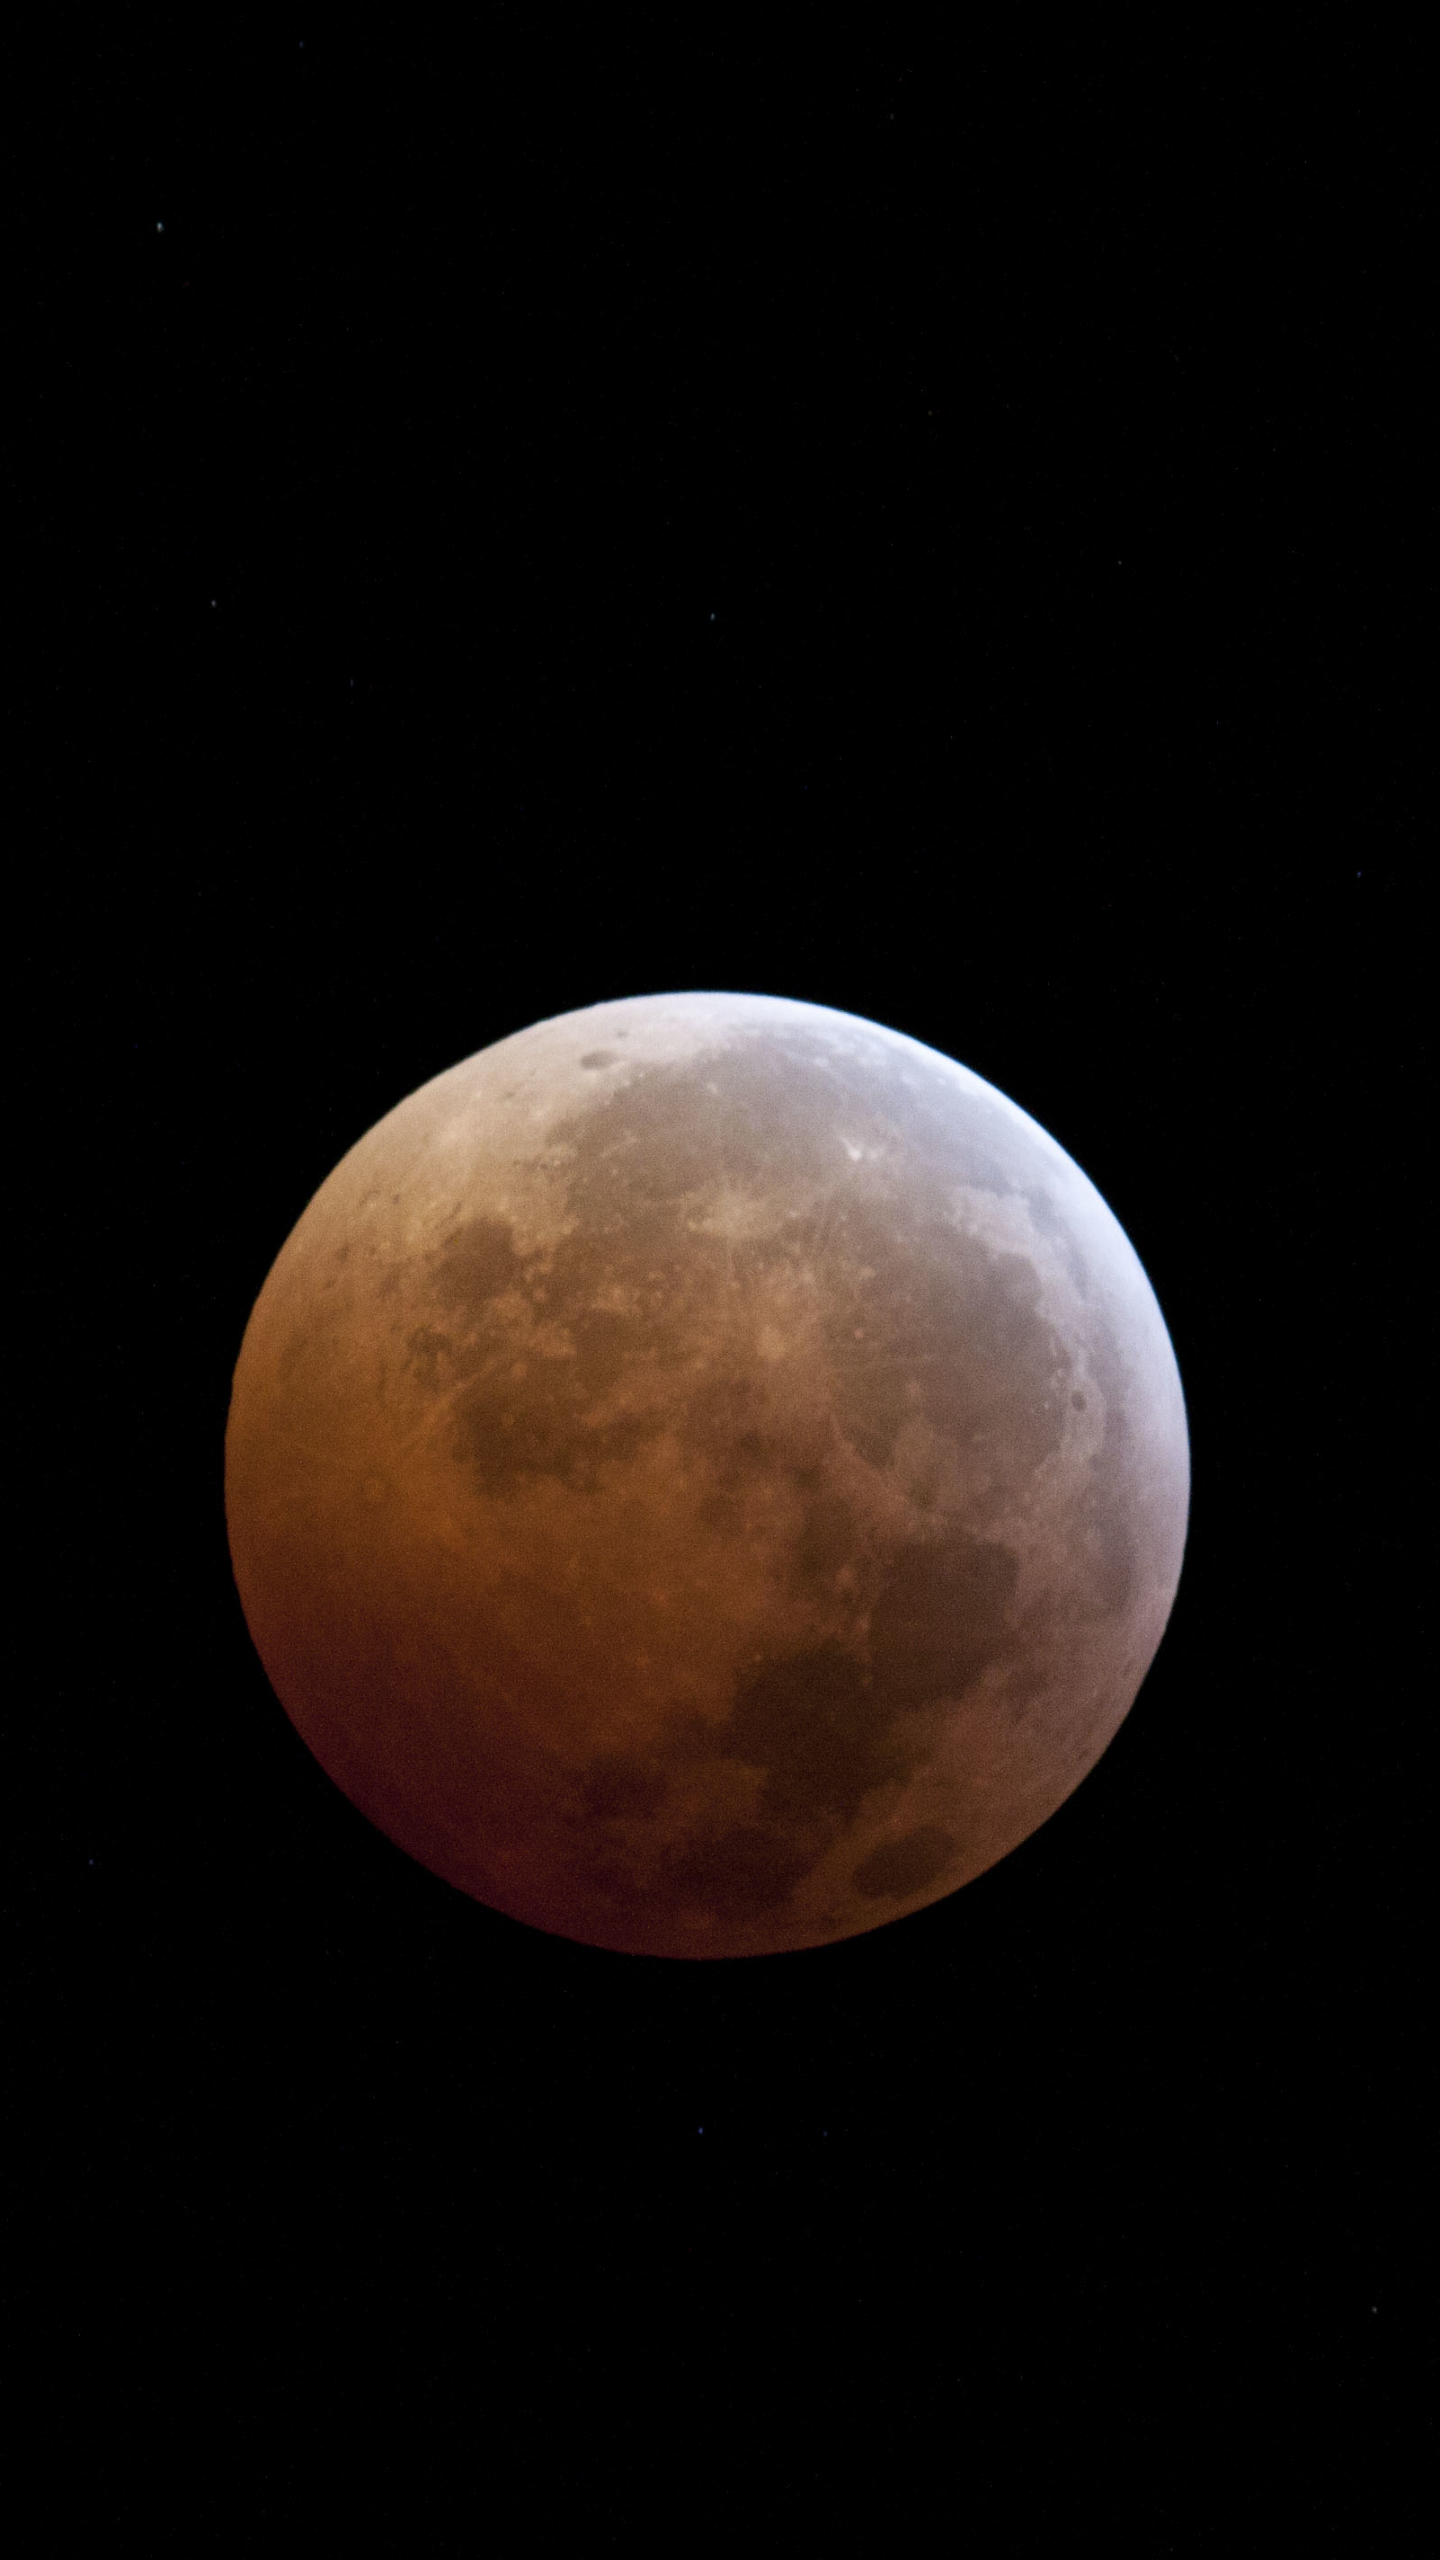 Wallpaper ID 359508  Earth Moon Phone Wallpaper Blood Moon Lunar Eclipse  1080x2340 free download